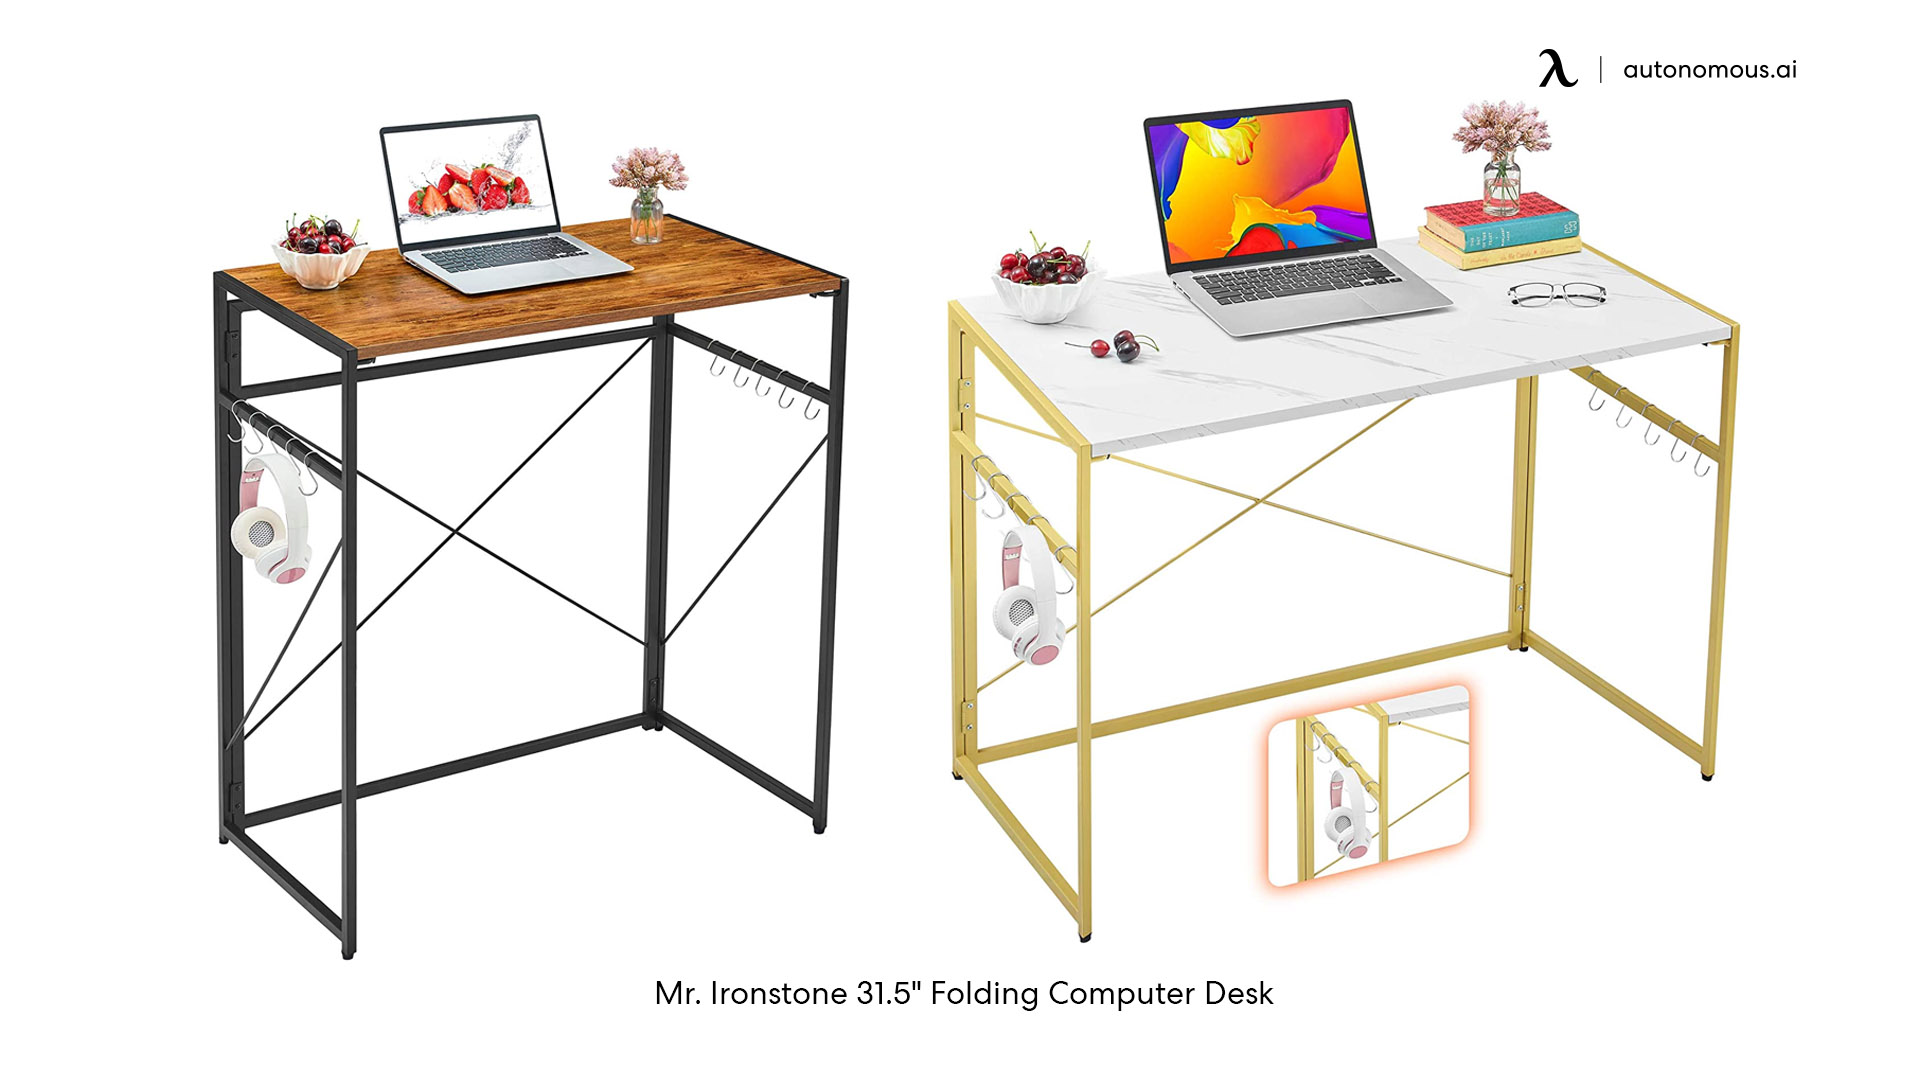 Mr. Ironstone 31.5" Folding Computer Desk